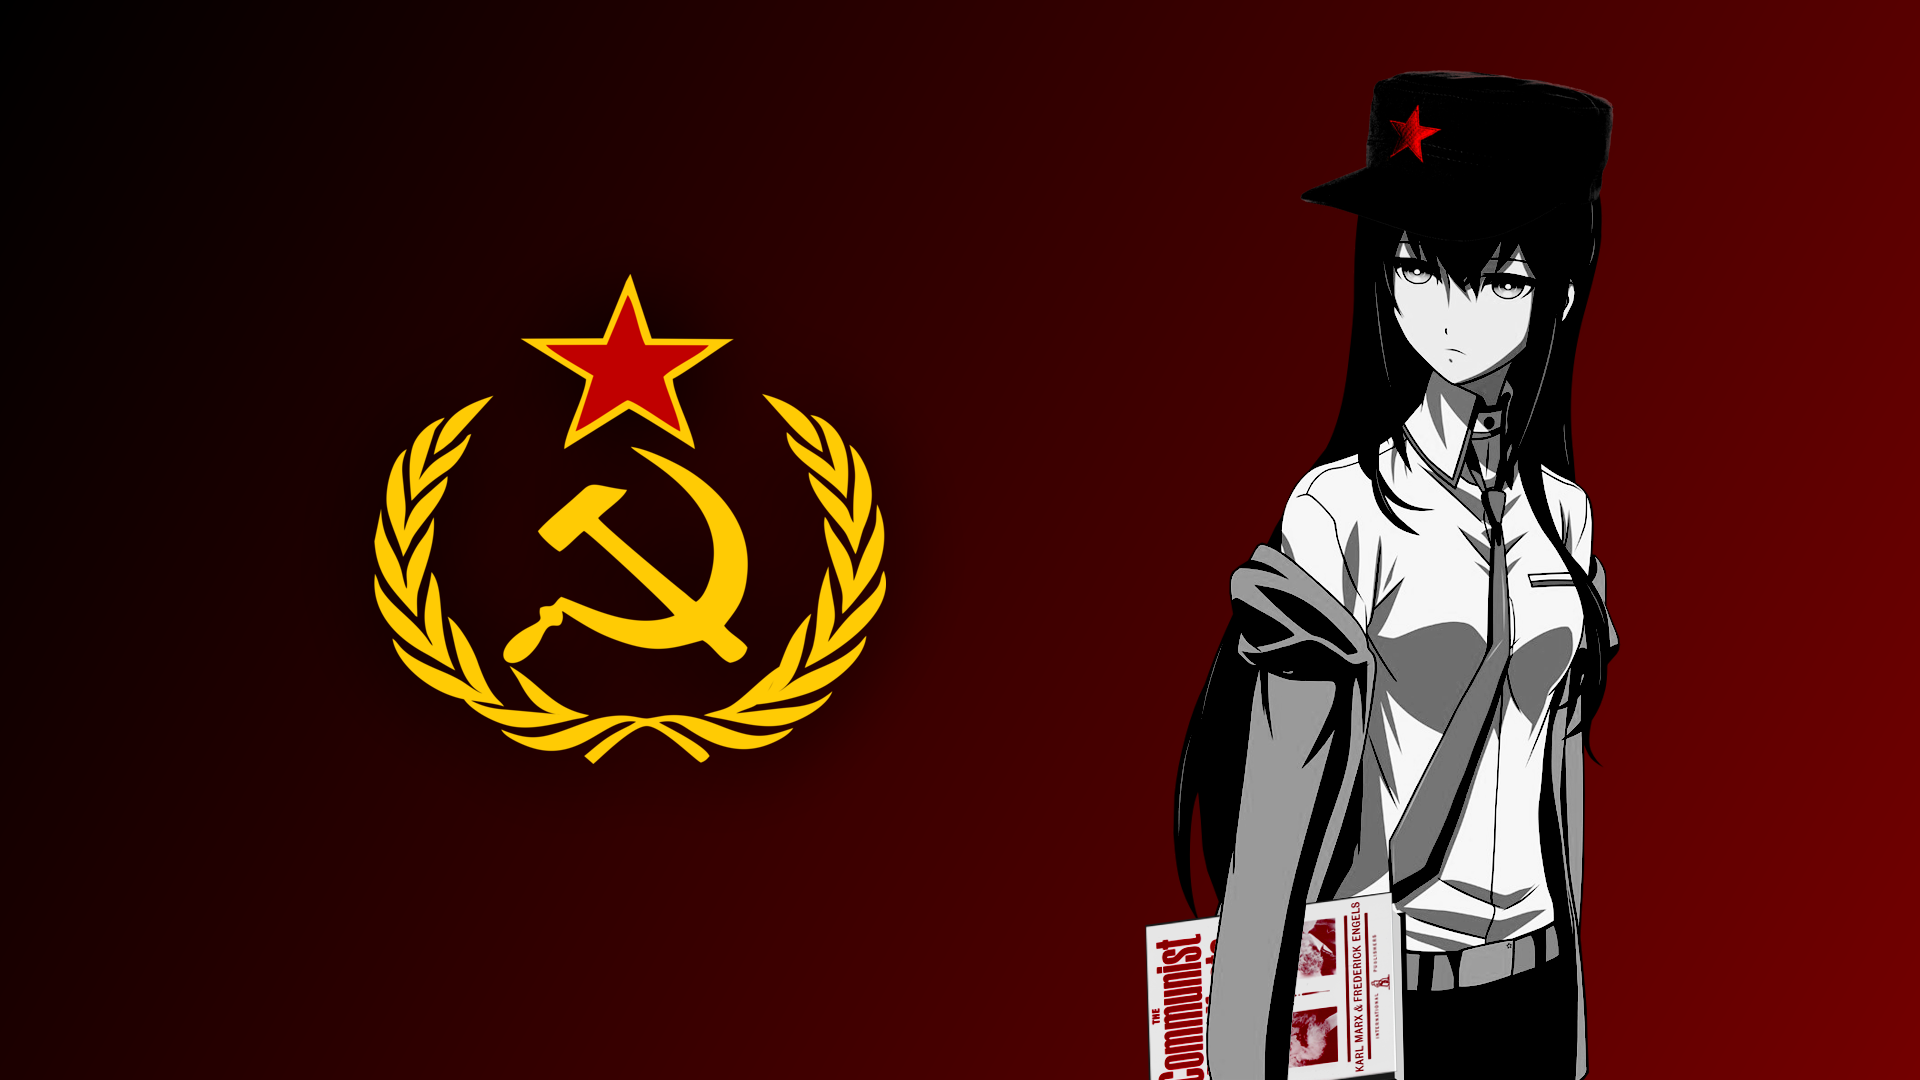 Anime 1920x1080 communism socialism Steins;Gate Makise Kurisu politics manga